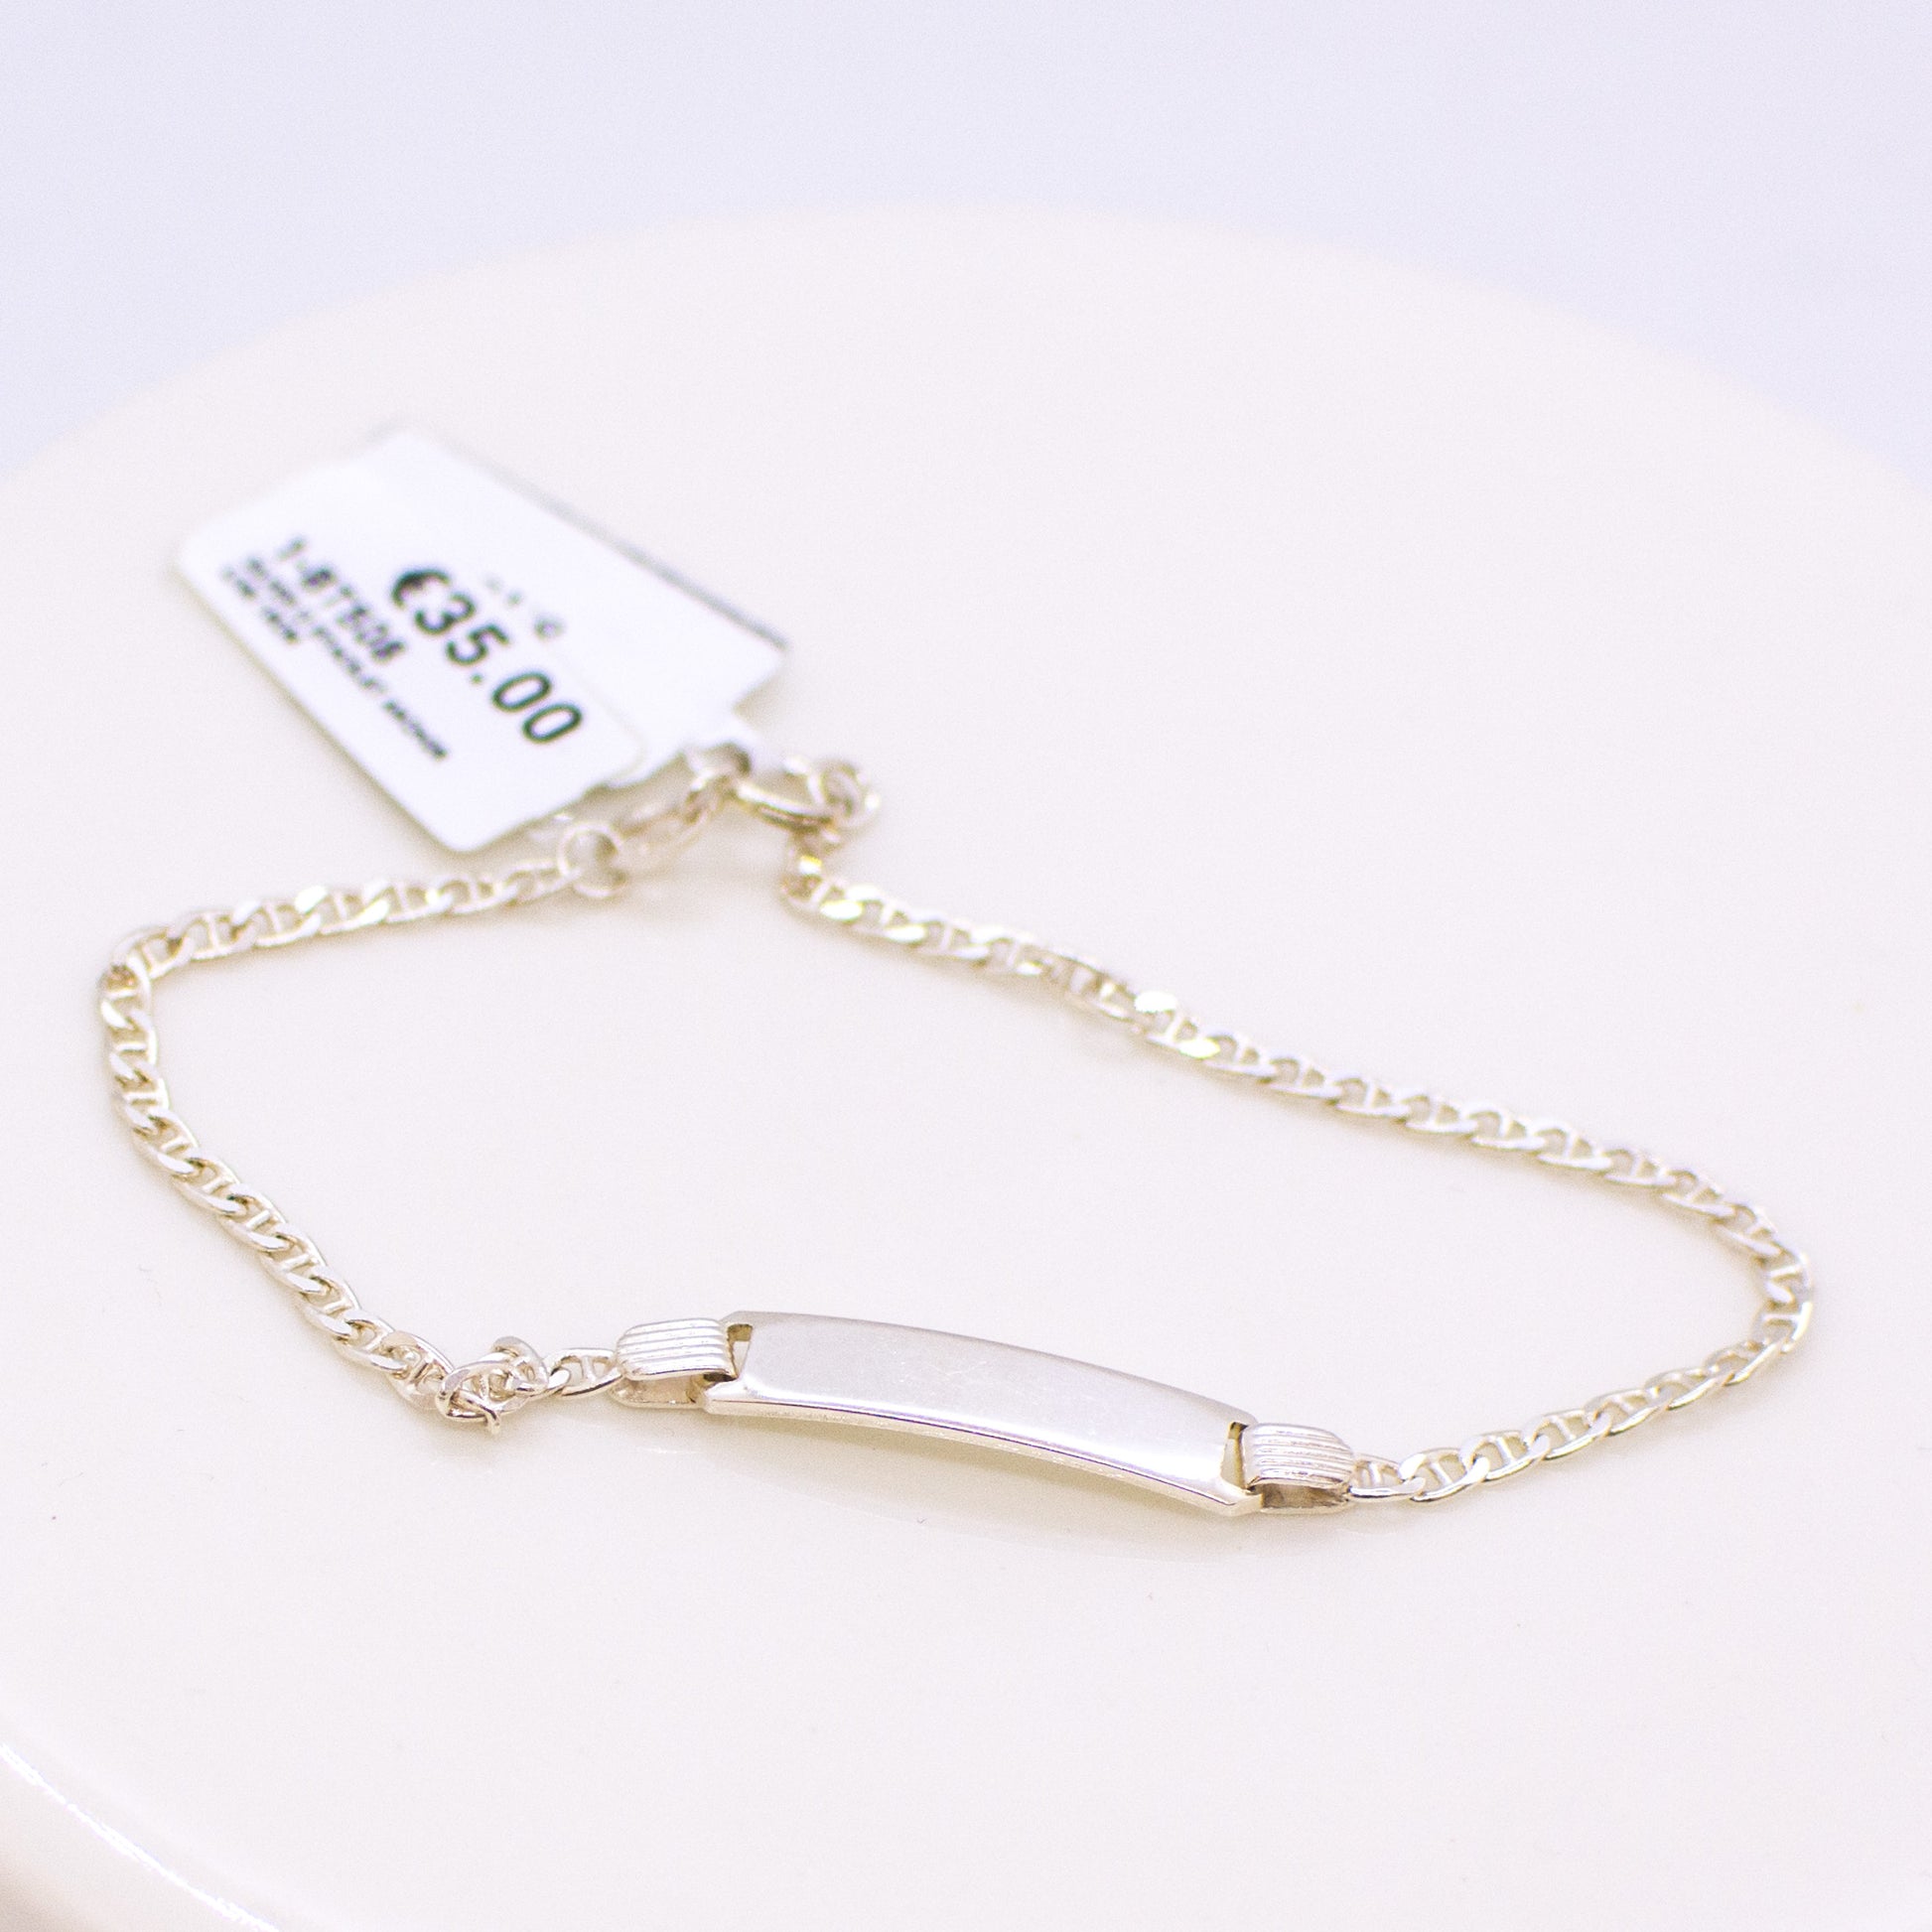 Silver Child's Identity Bracelet - Anchor Link 18cm - John Ross Jewellers